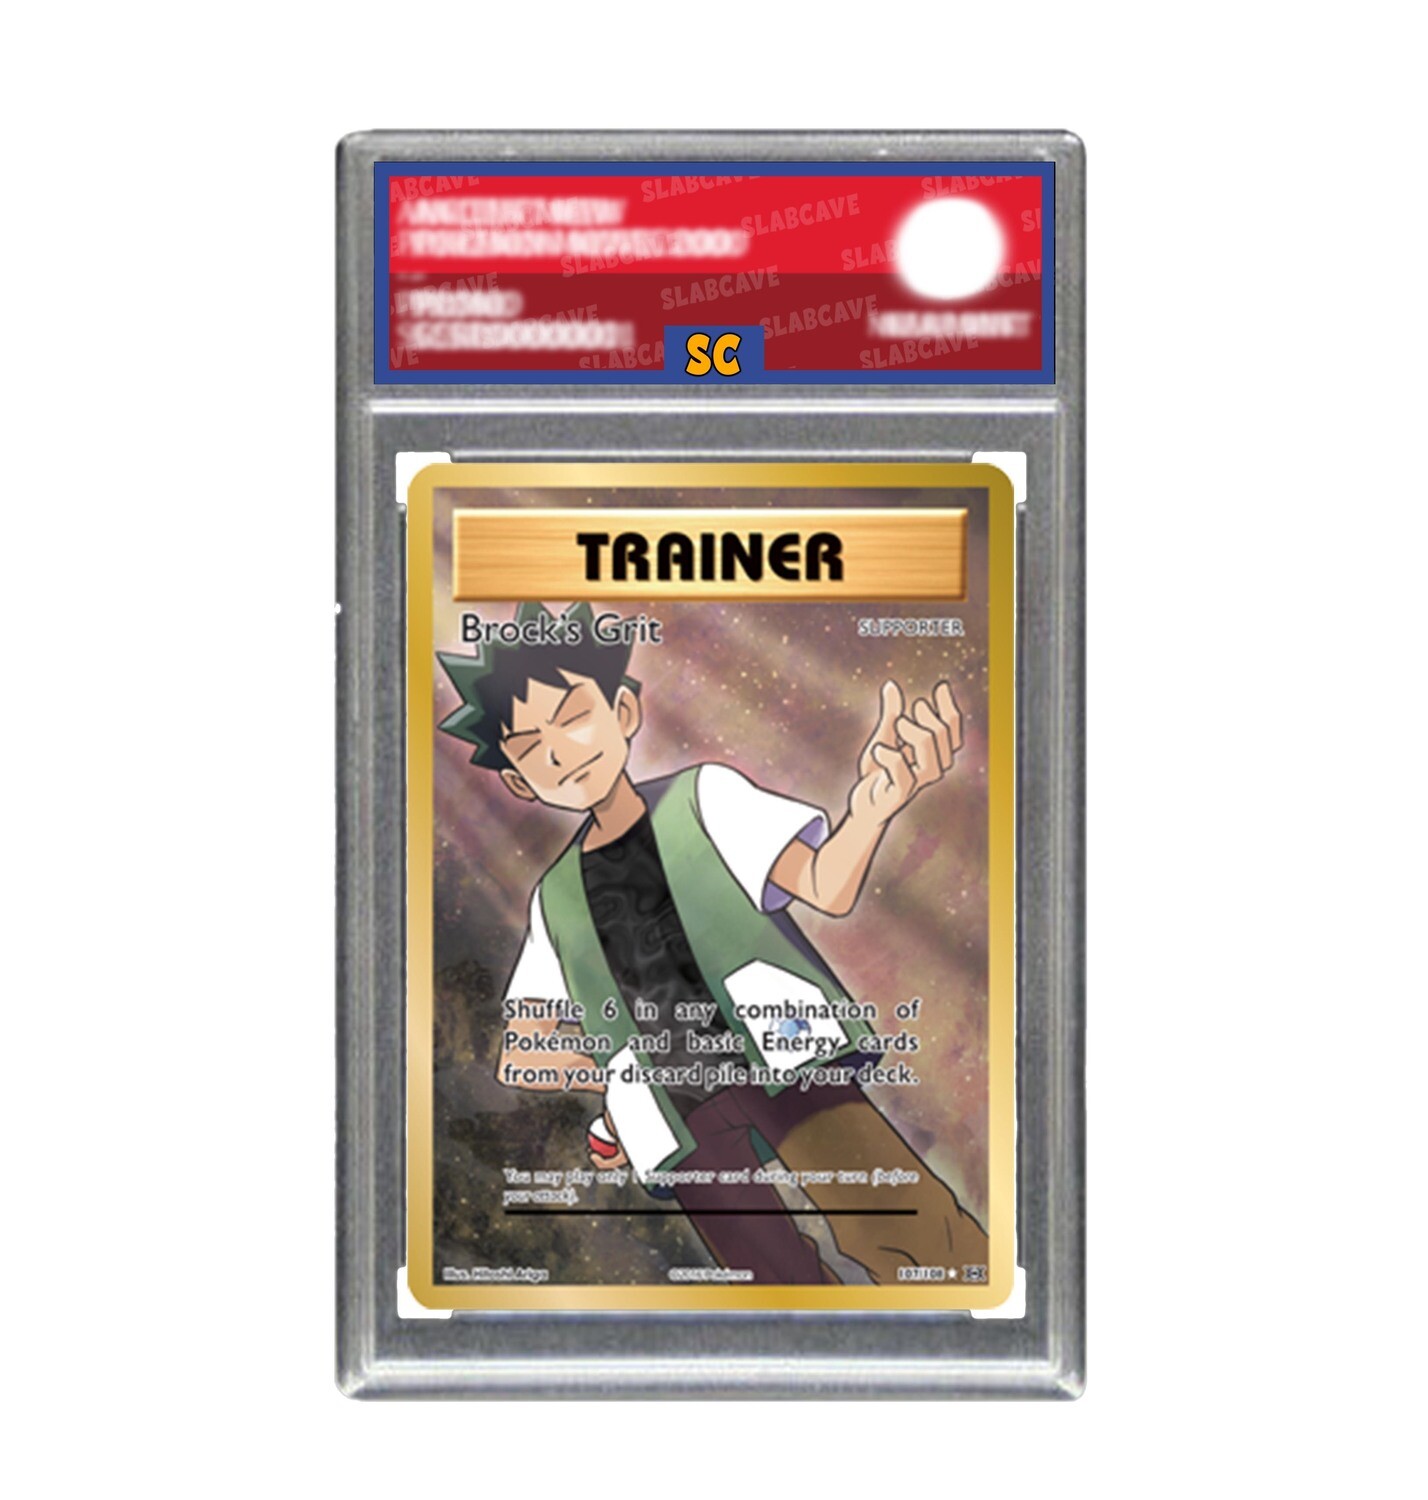 Graded Pokemon Card: SC 9 - Brock's Grit 107/108 [XY Evolutions] [Ultra Rare - Gold Card]